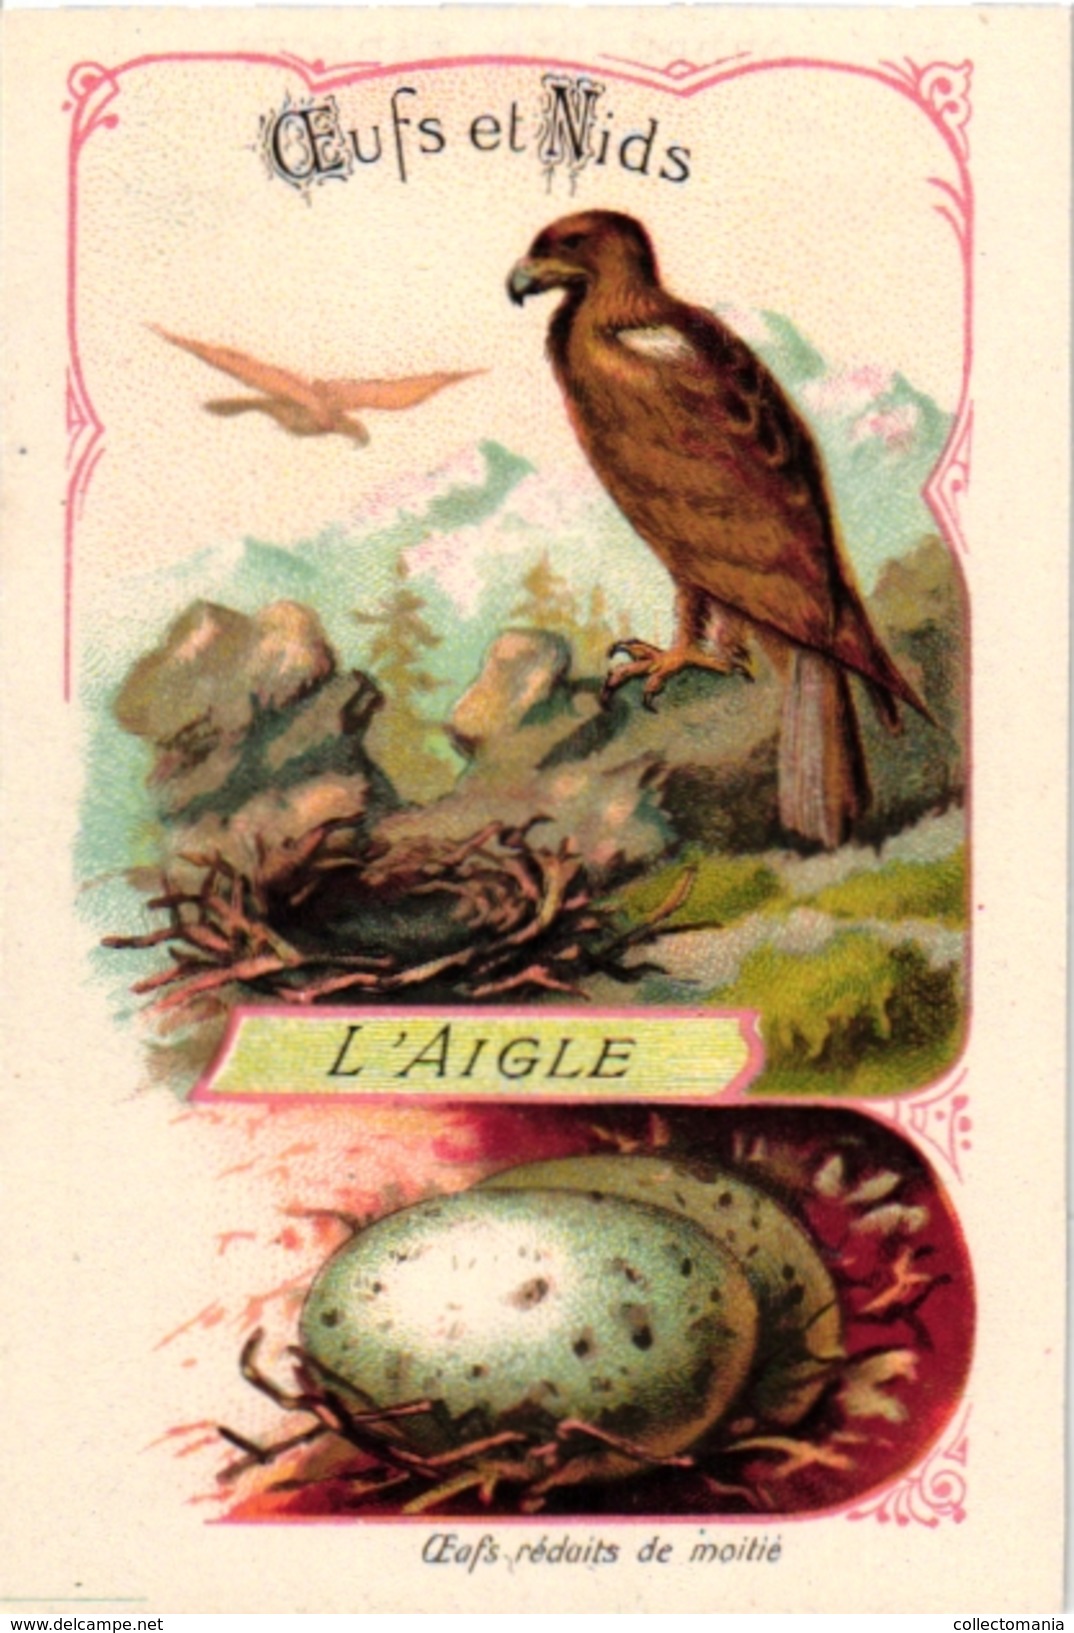 25 Cards chromo litho c1895  Ordre des Chanteurs Birds with  their Nests and  Eggs la Grue Crane Kestler Reed Warbler